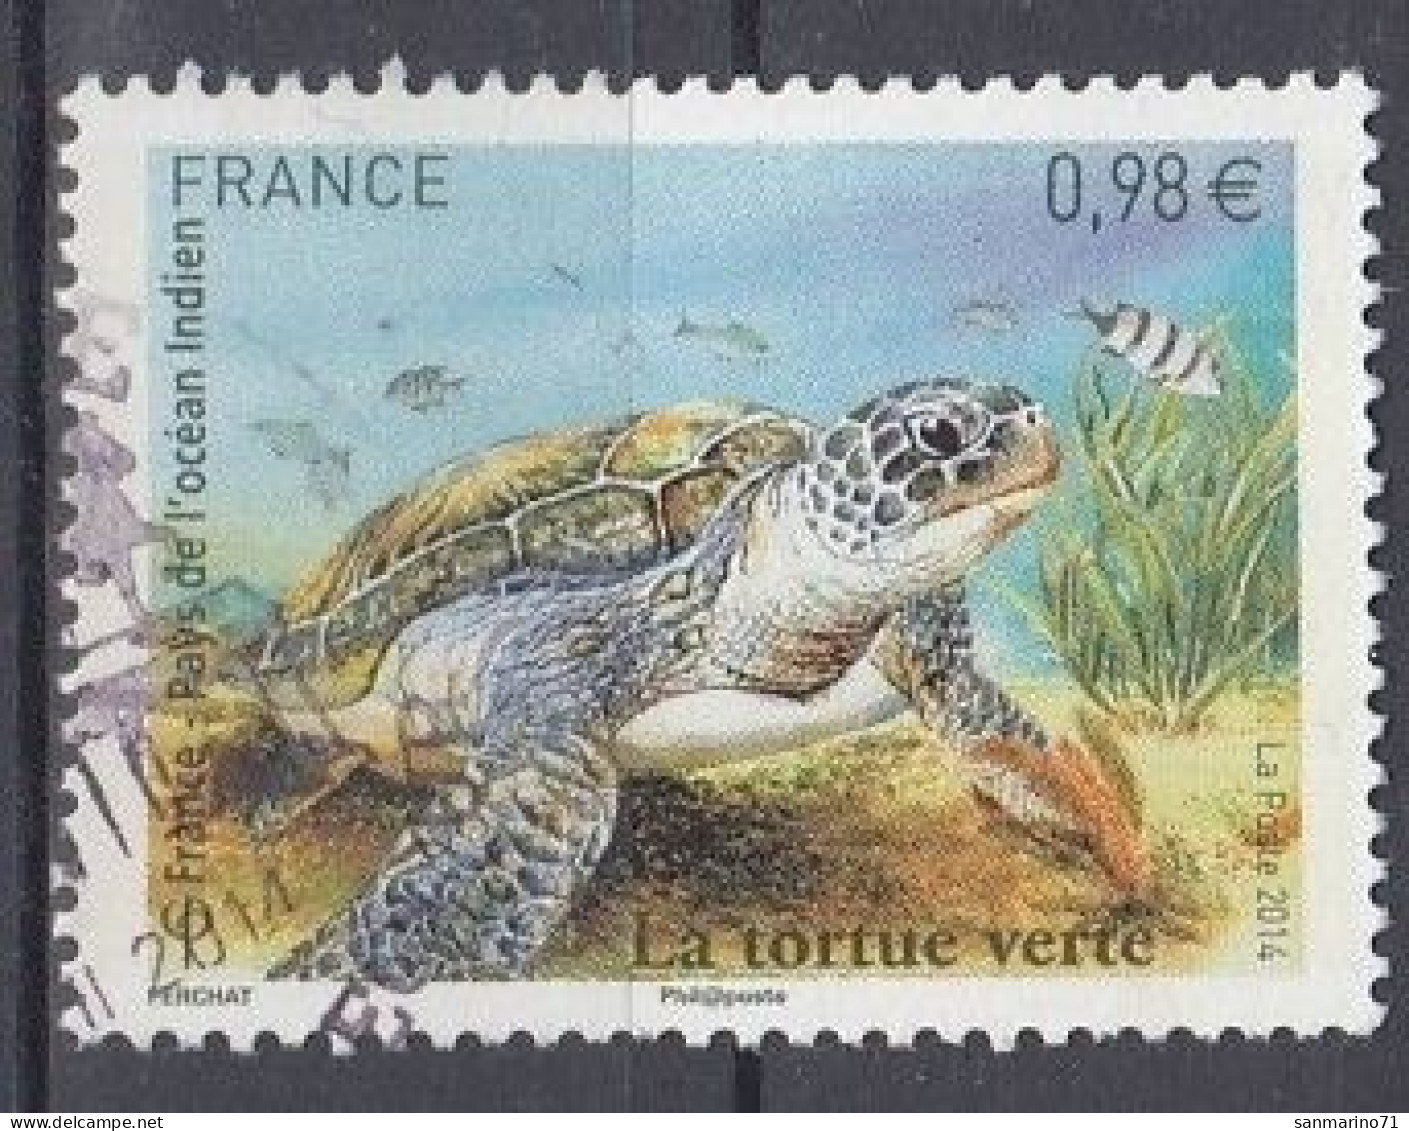 FRANCE 5996,used,falc Hinged - Turtles